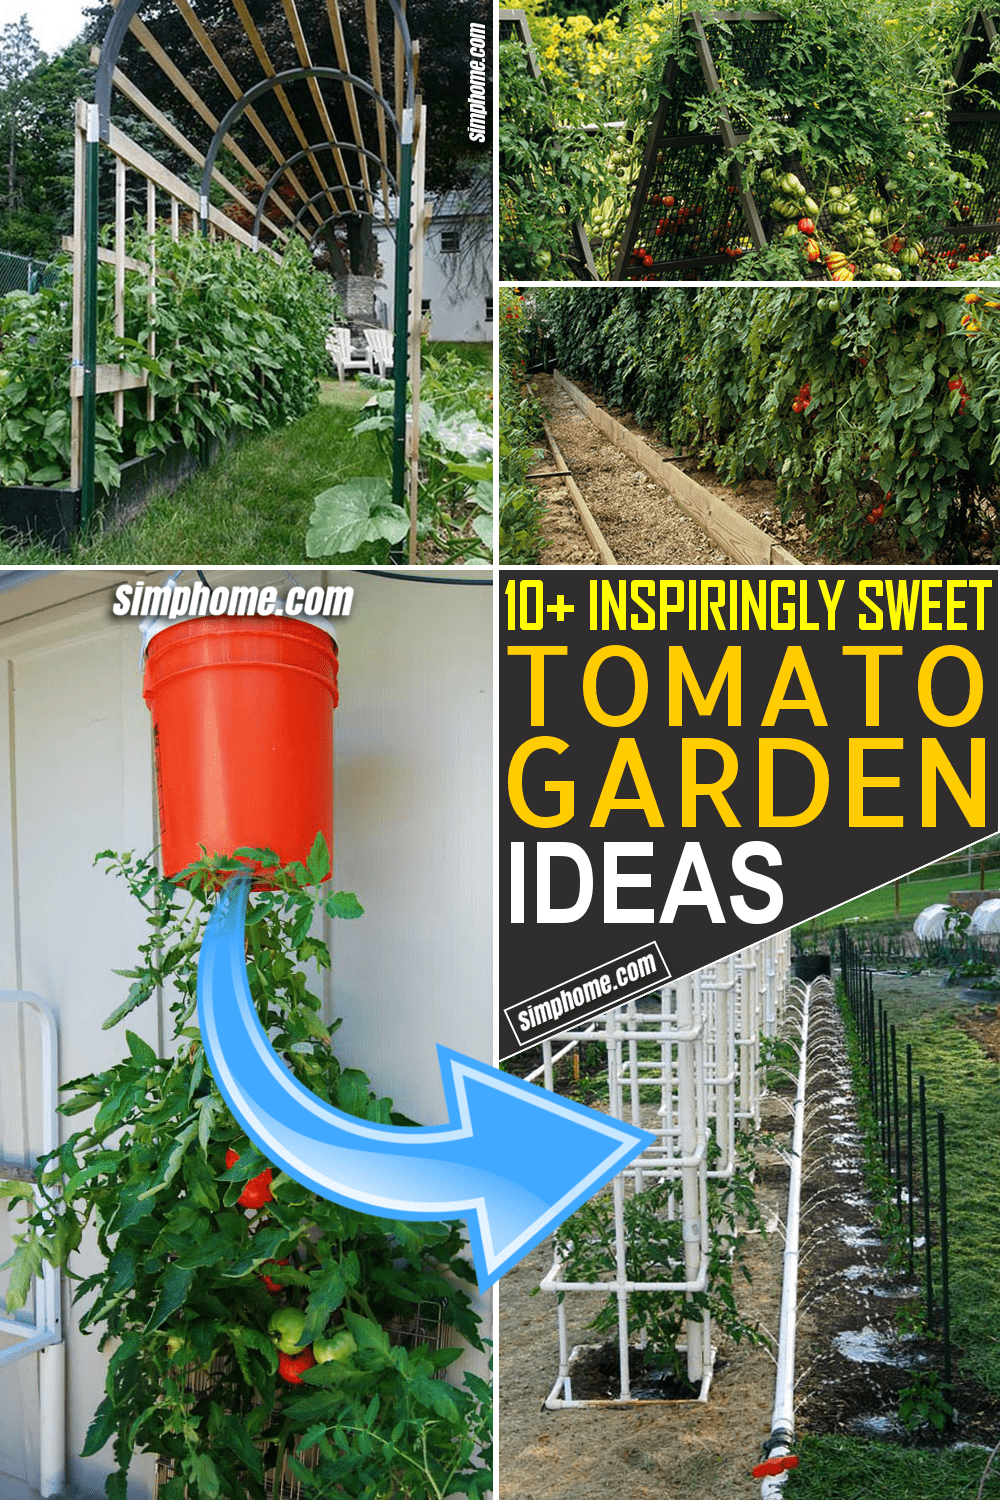 Simphome.com 10 tomato garden ideas Featured Pinterest Image